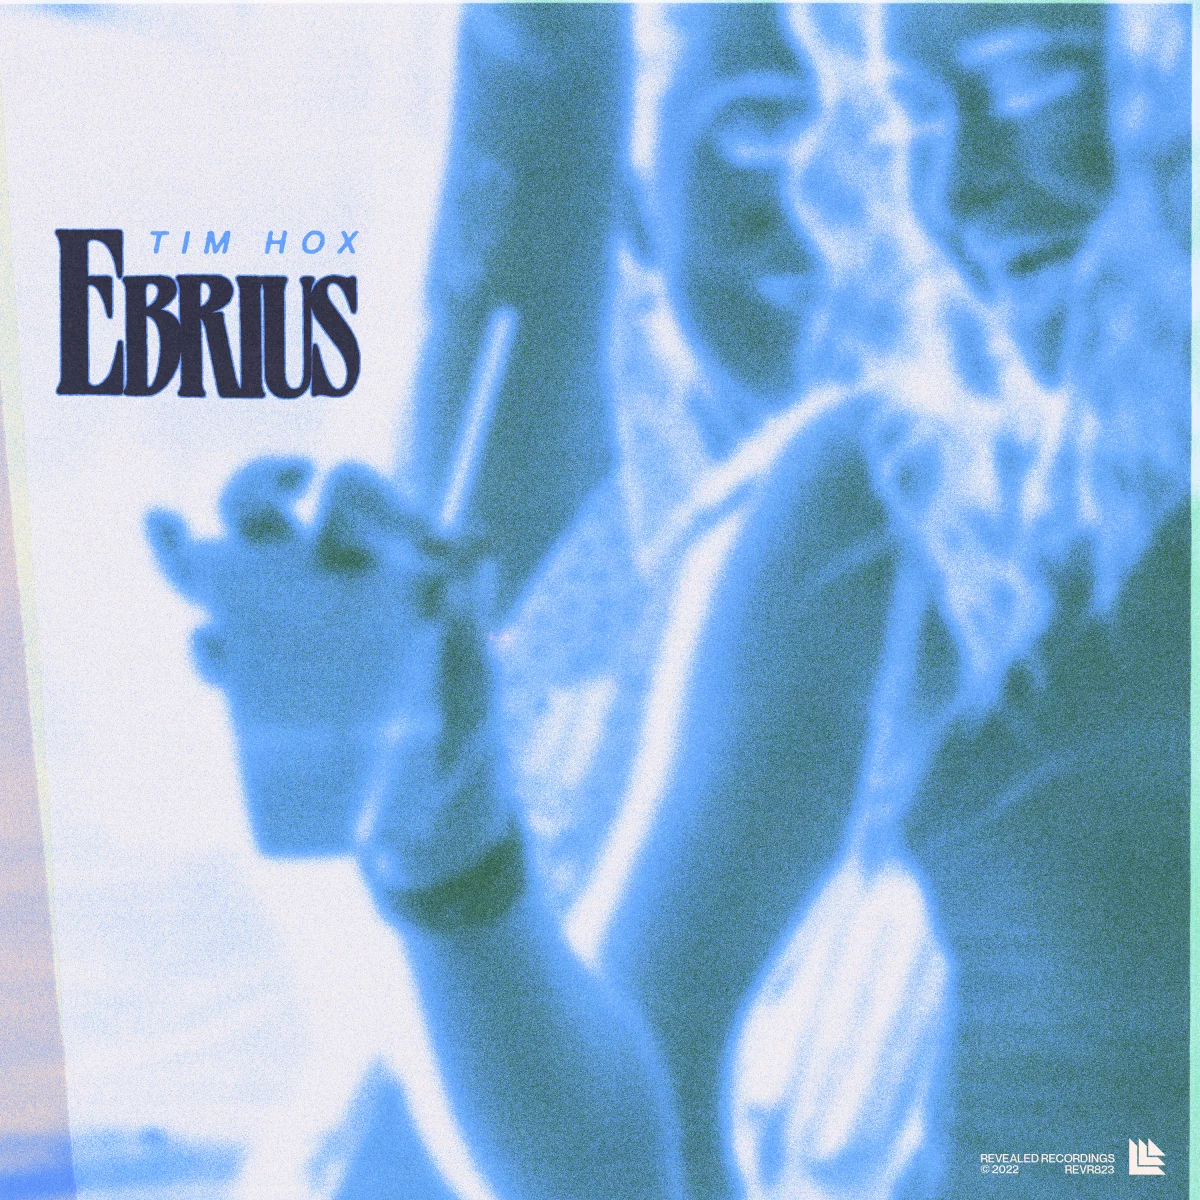 Ebrius (I'm gonna get f***ed up tonight) - Tim Hox⁠ 